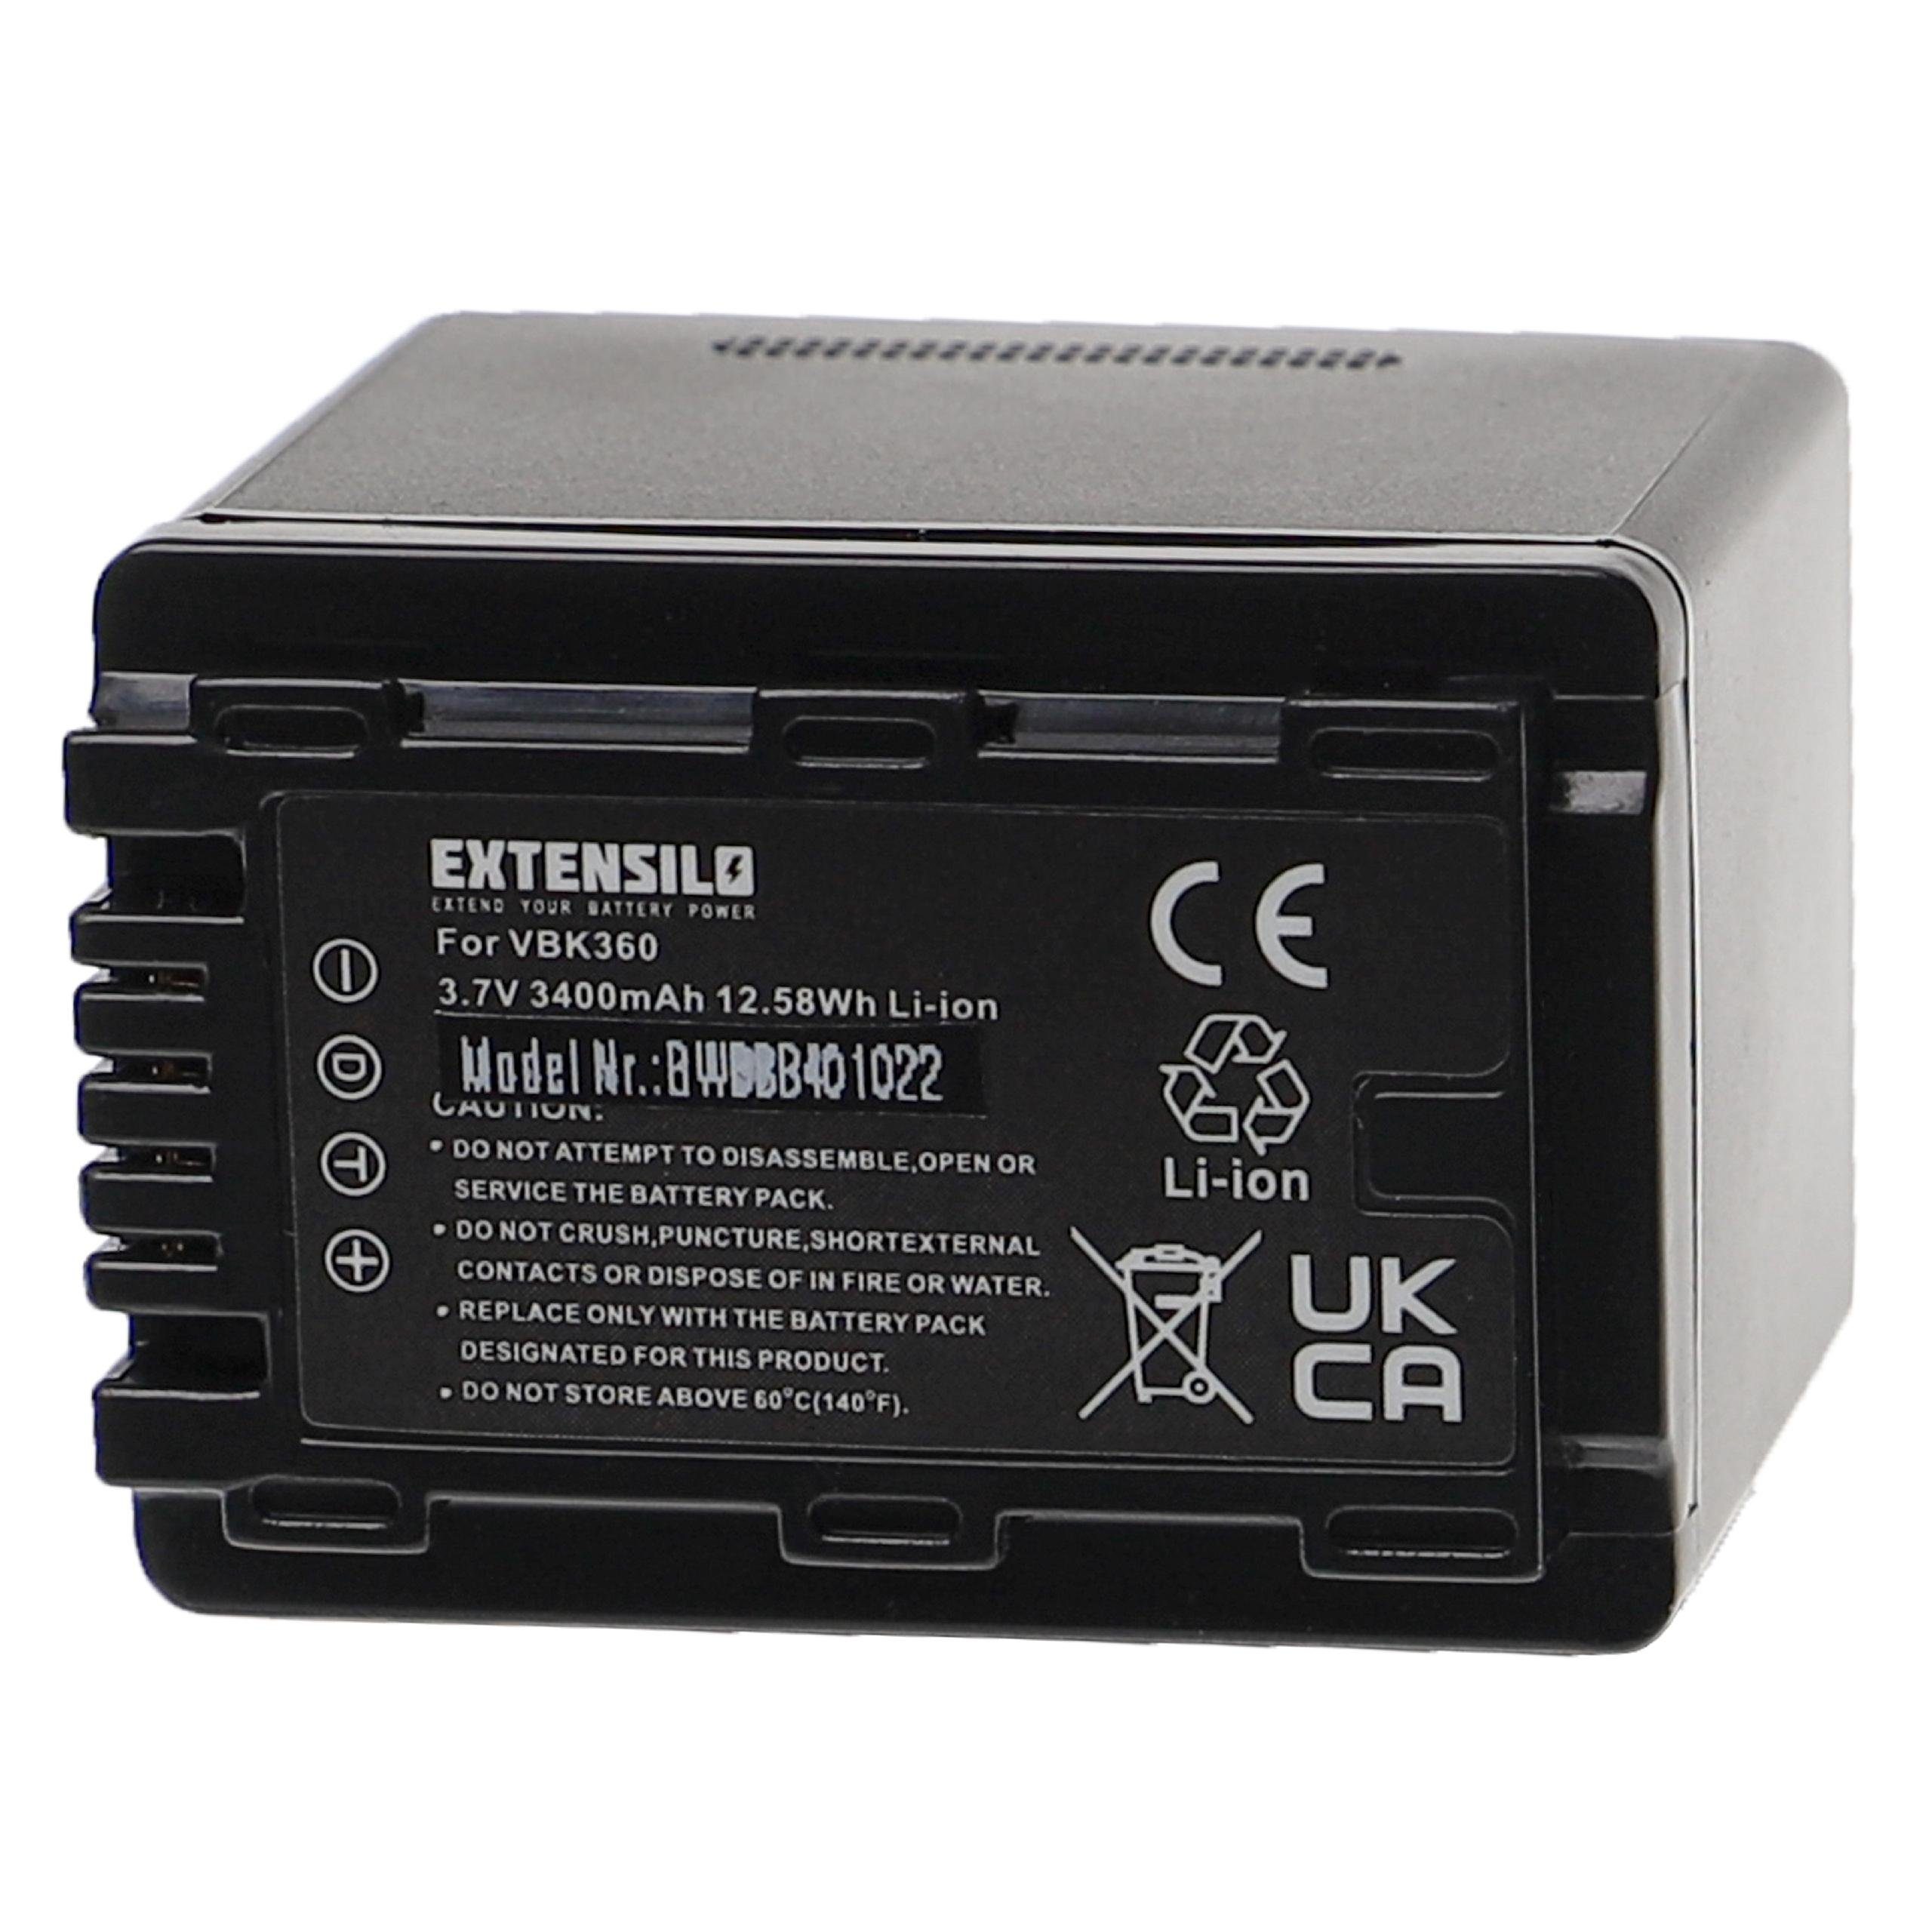 Extensilo passend für Panasonic SDR-S50, SDR-T50, SDR-H85A, SDR-H85K, SDR-H85S, Kamera-Akku 3400 mAh